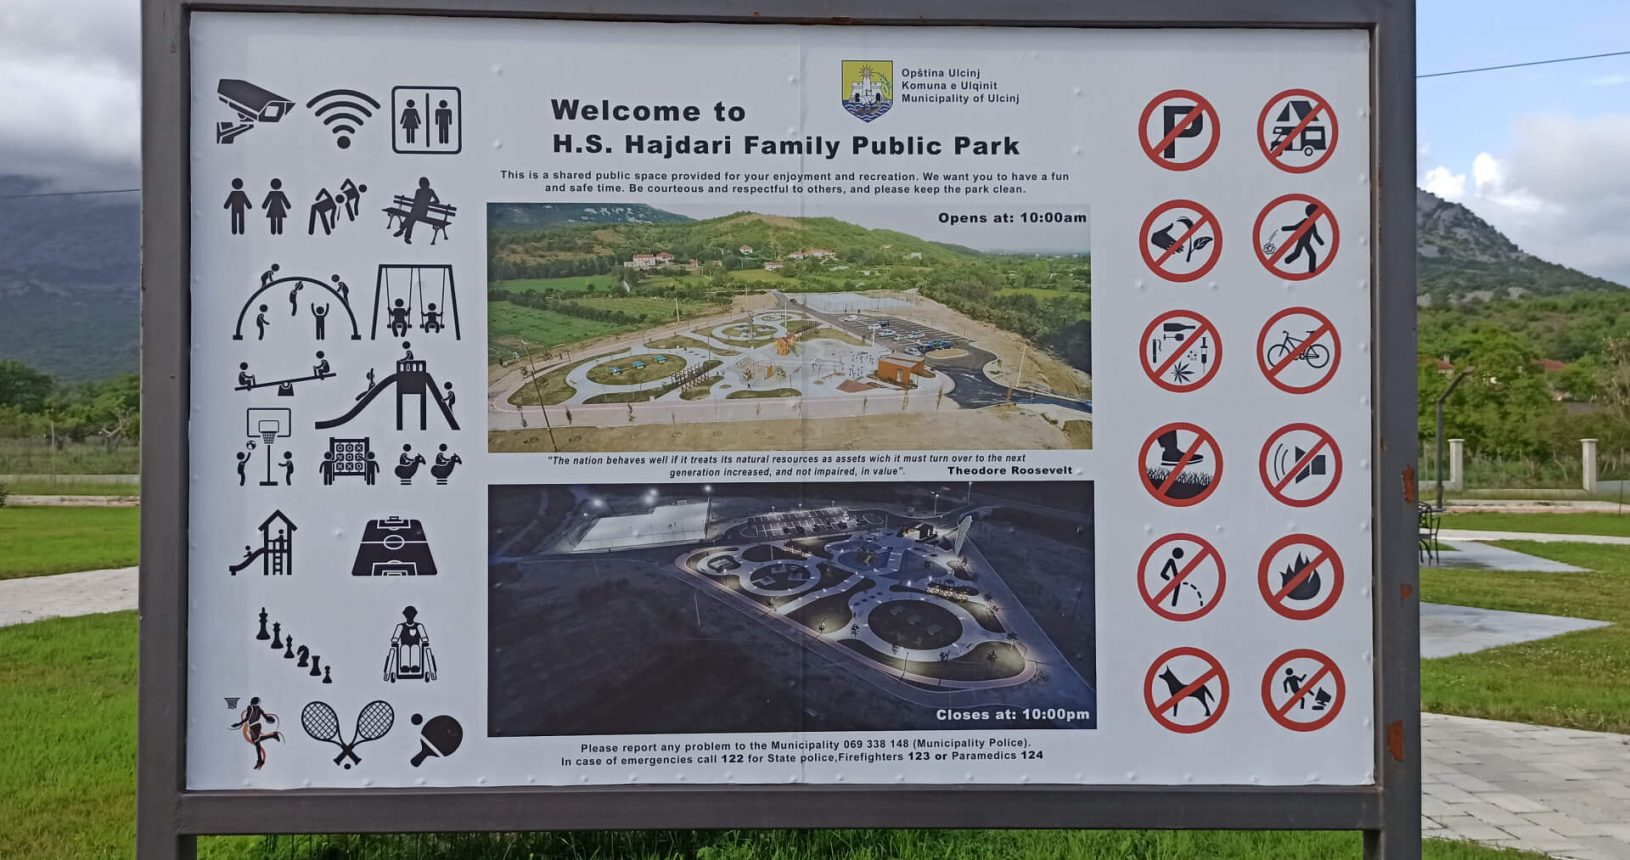 The plan of Hajdari Family Public Park